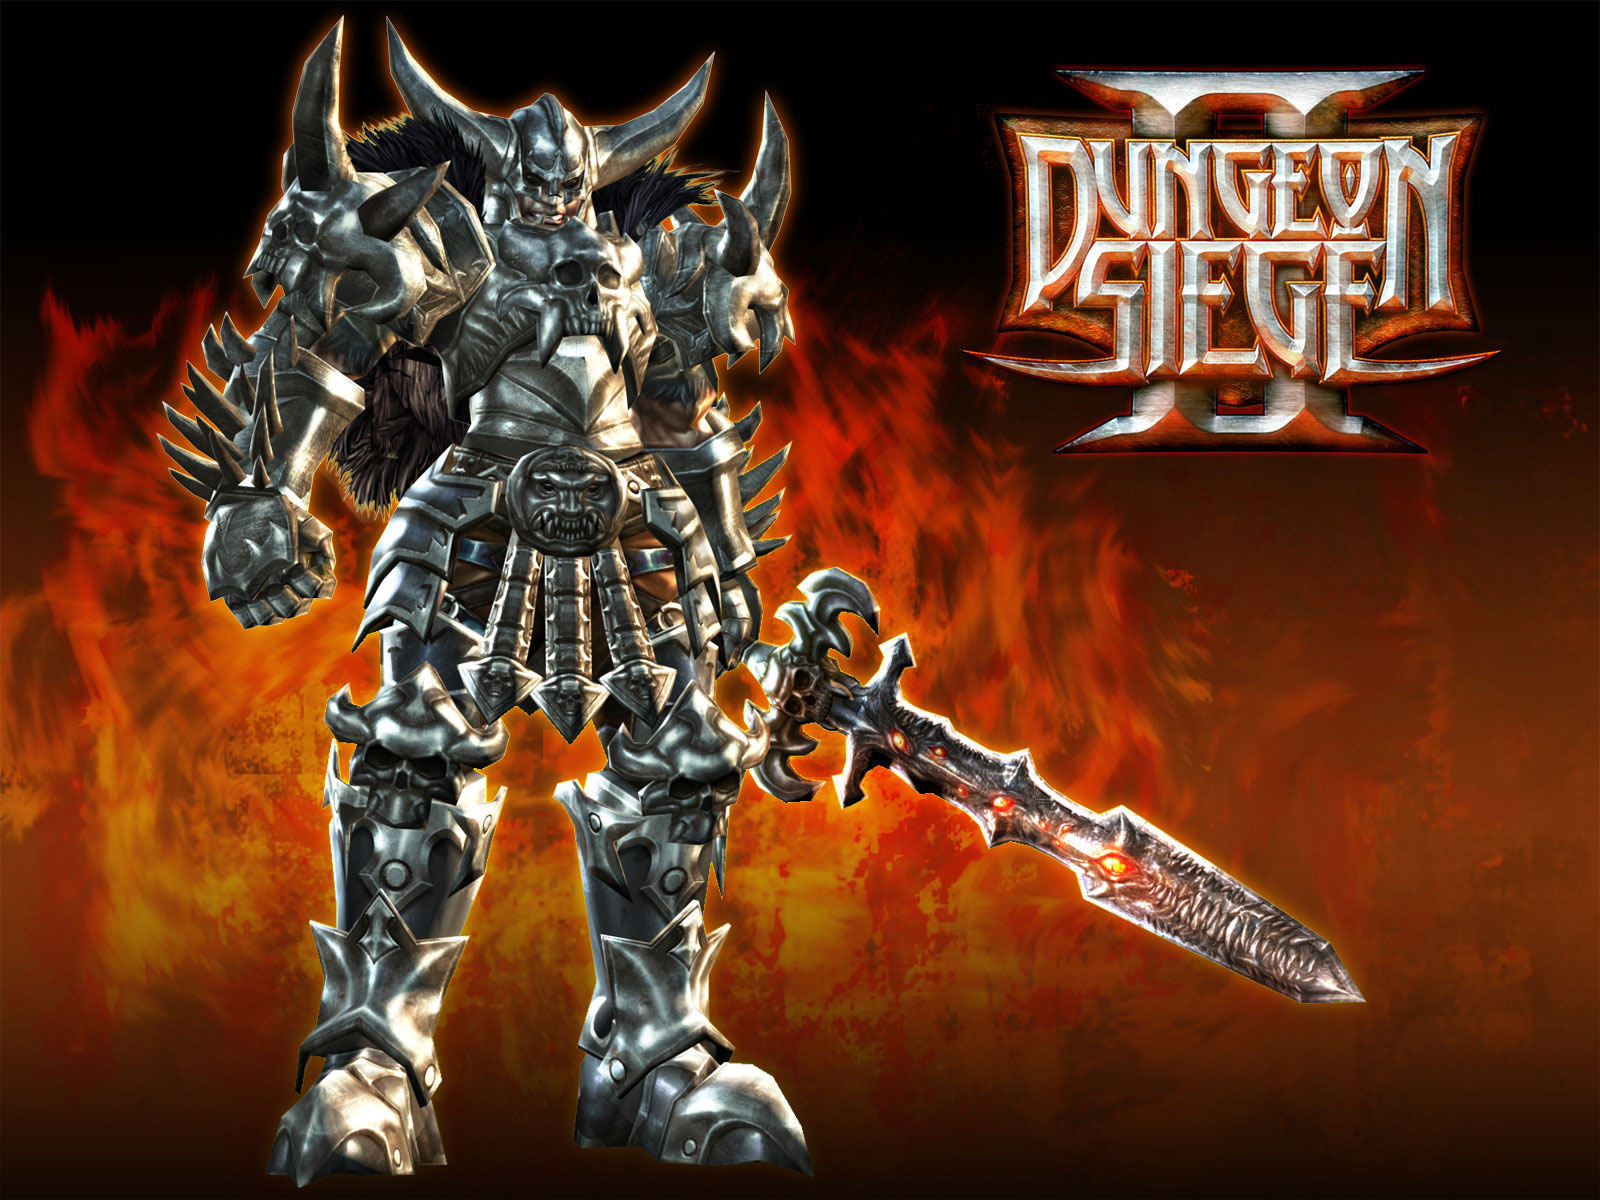 Dungeon Siege 2 (II) wallpapers HD for desktop backgrounds